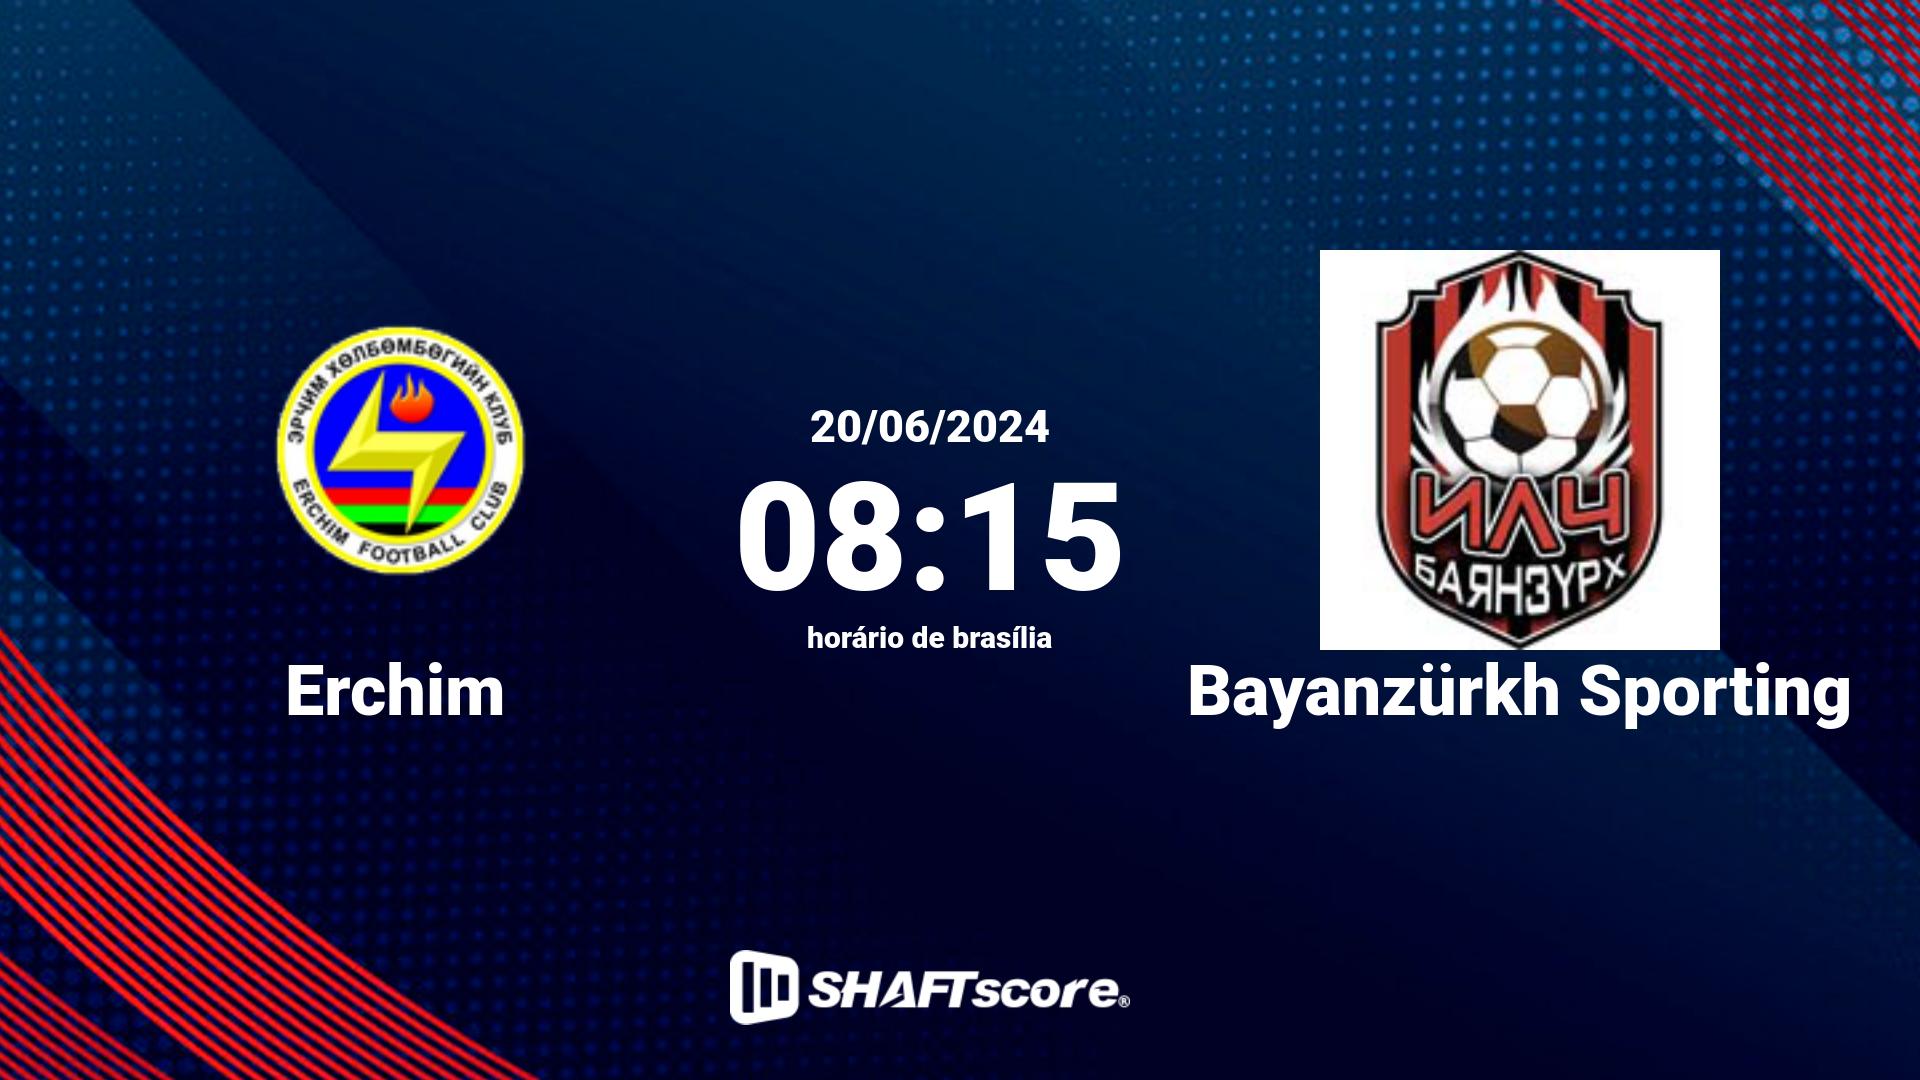 Estatísticas do jogo Erchim vs Bayanzürkh Sporting 20.06 08:15